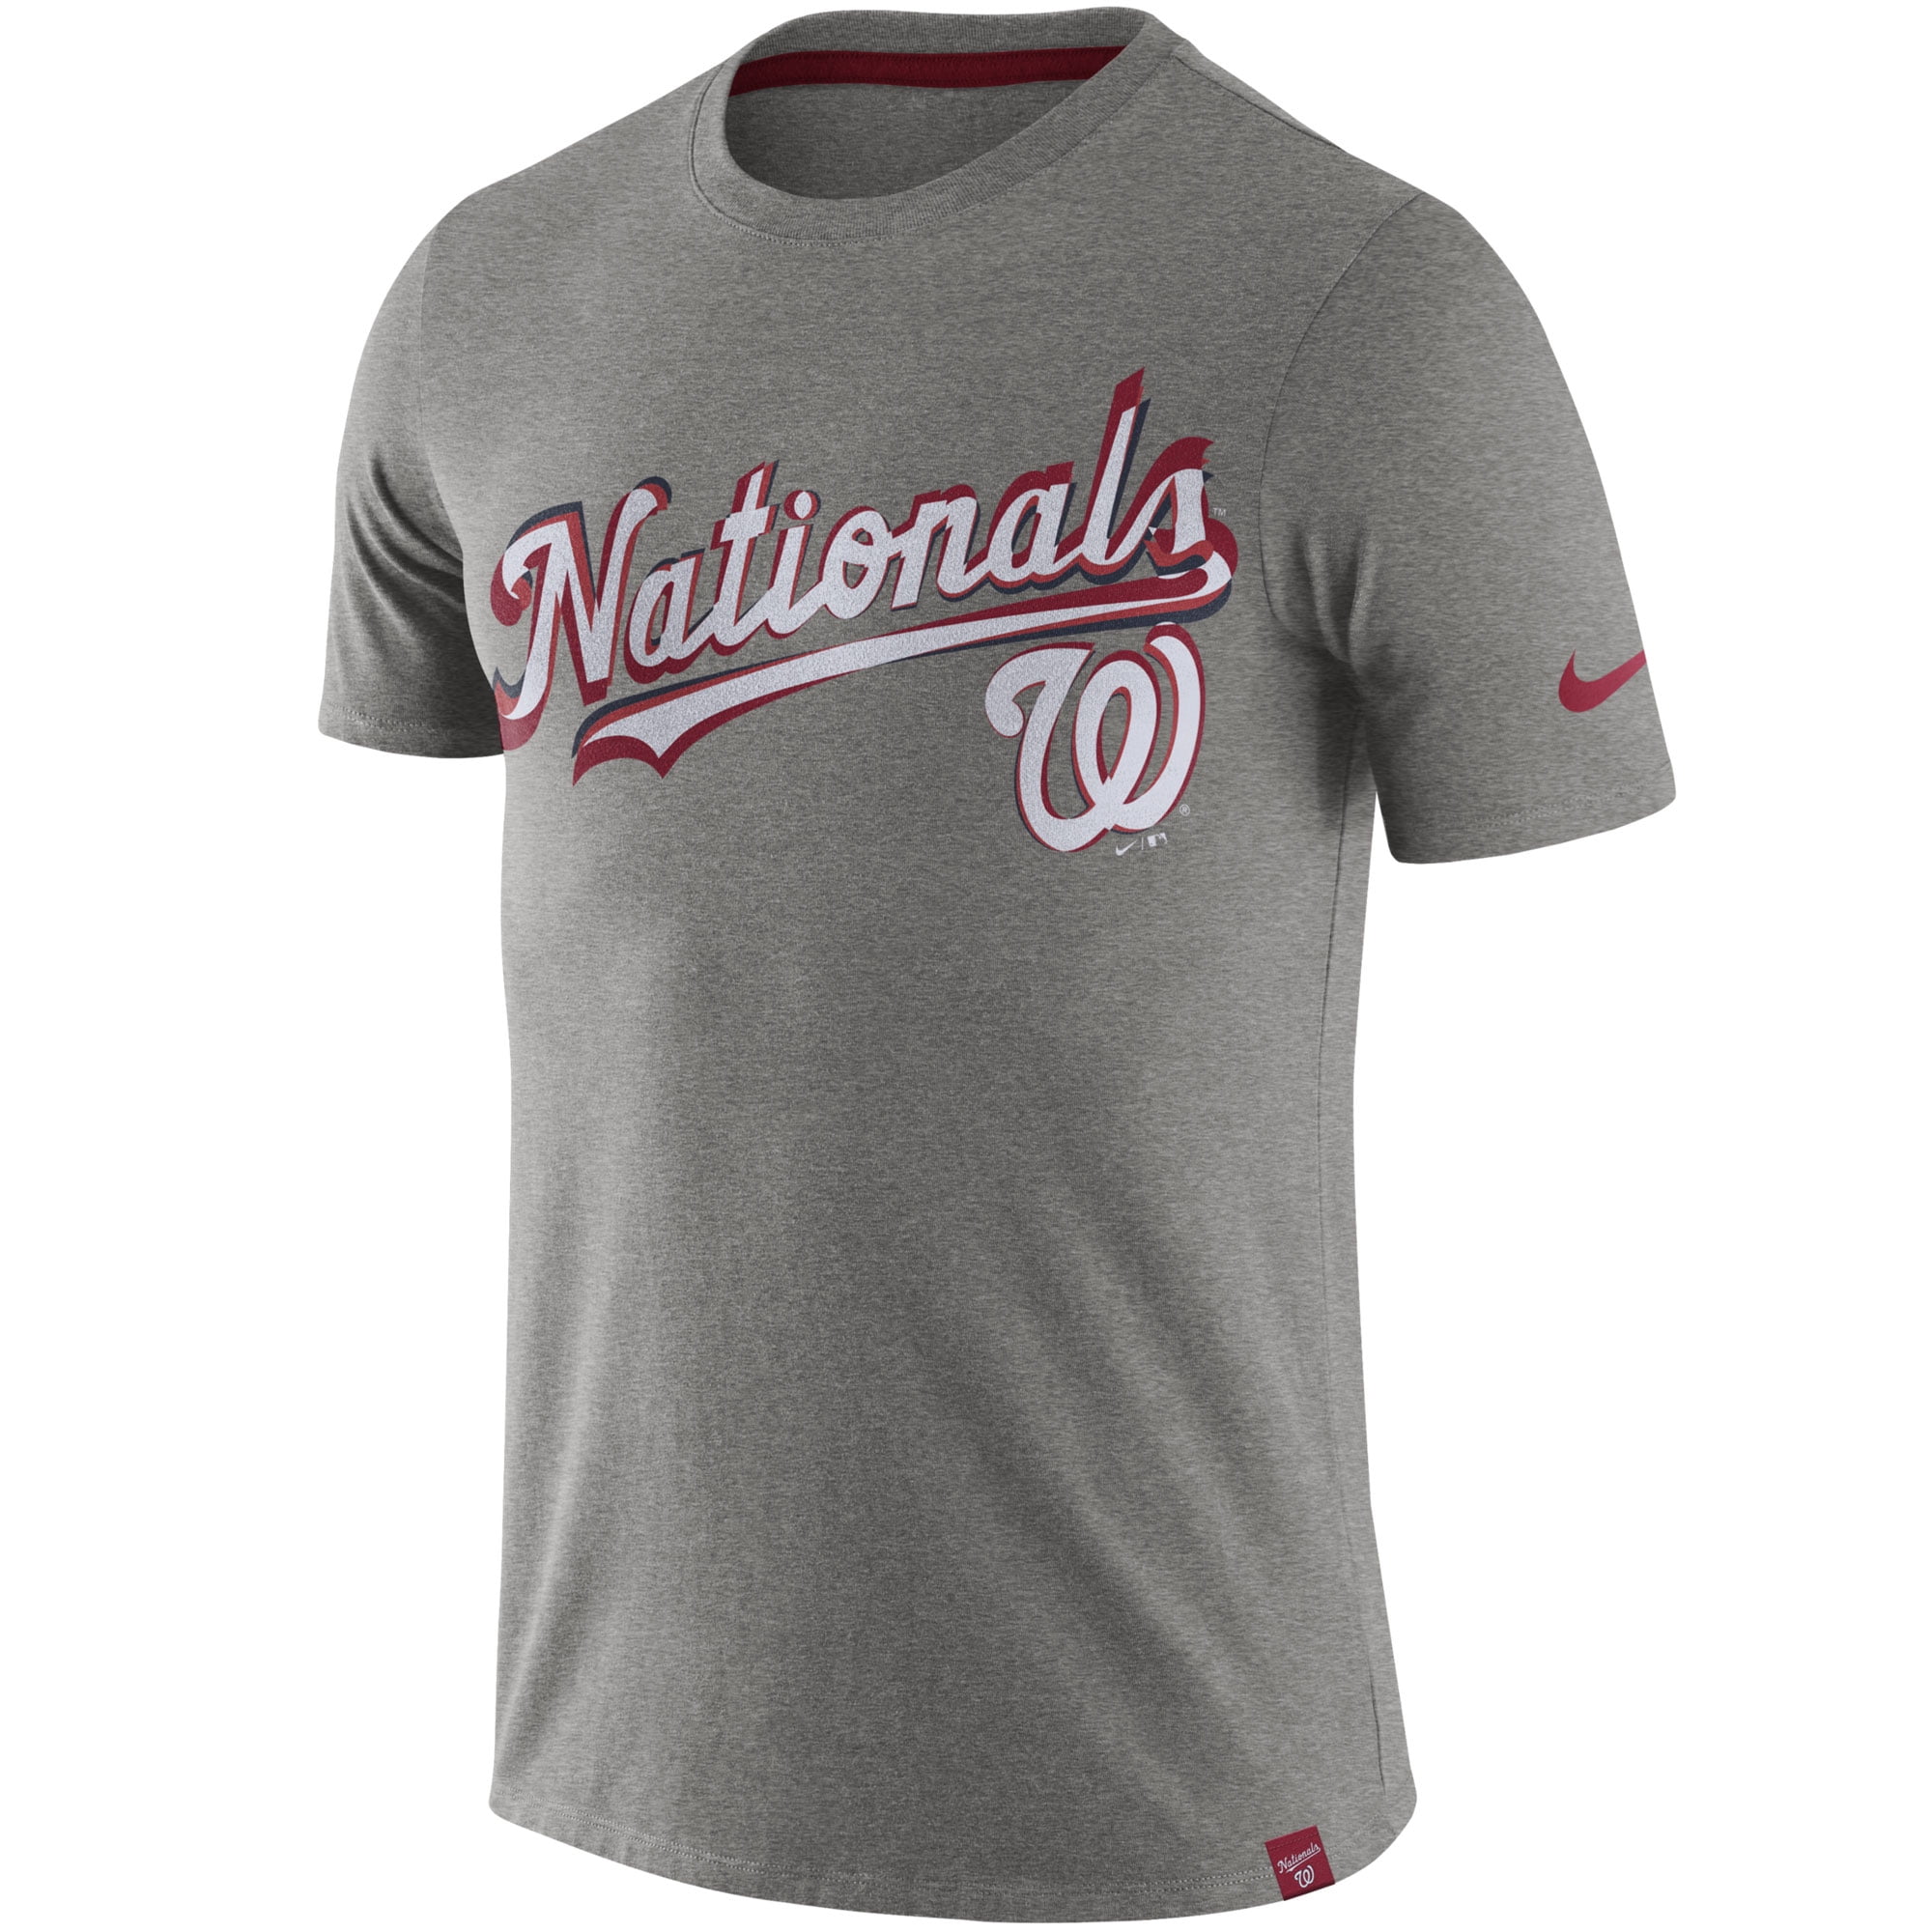 washington nationals nike shirt